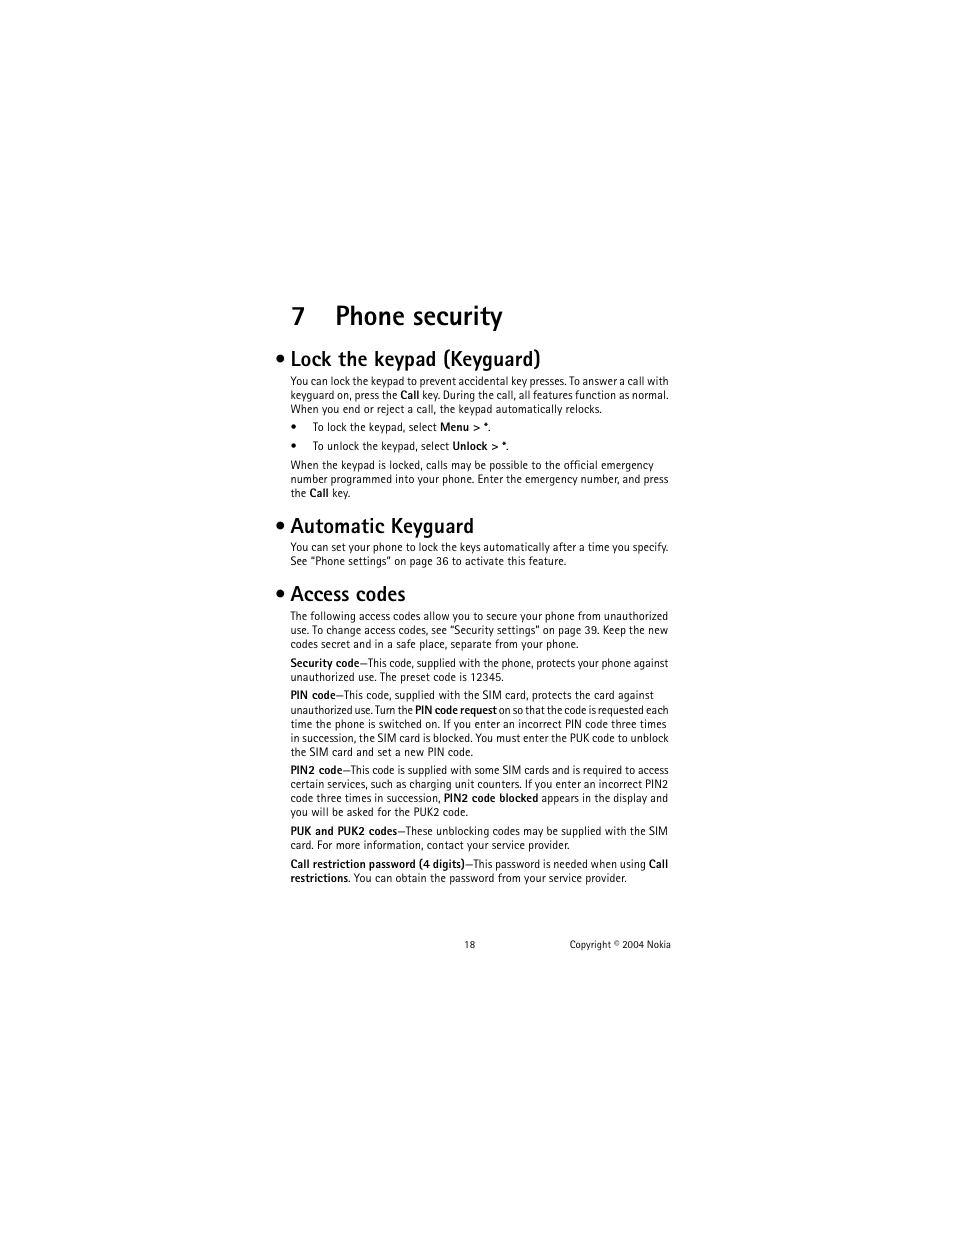 pindas Afhaalmaaltijd Distributie 7 phone security, Lock the keypad (keyguard), Automatic keyguard | Nokia  3220 User Manual | Page 25 / 81